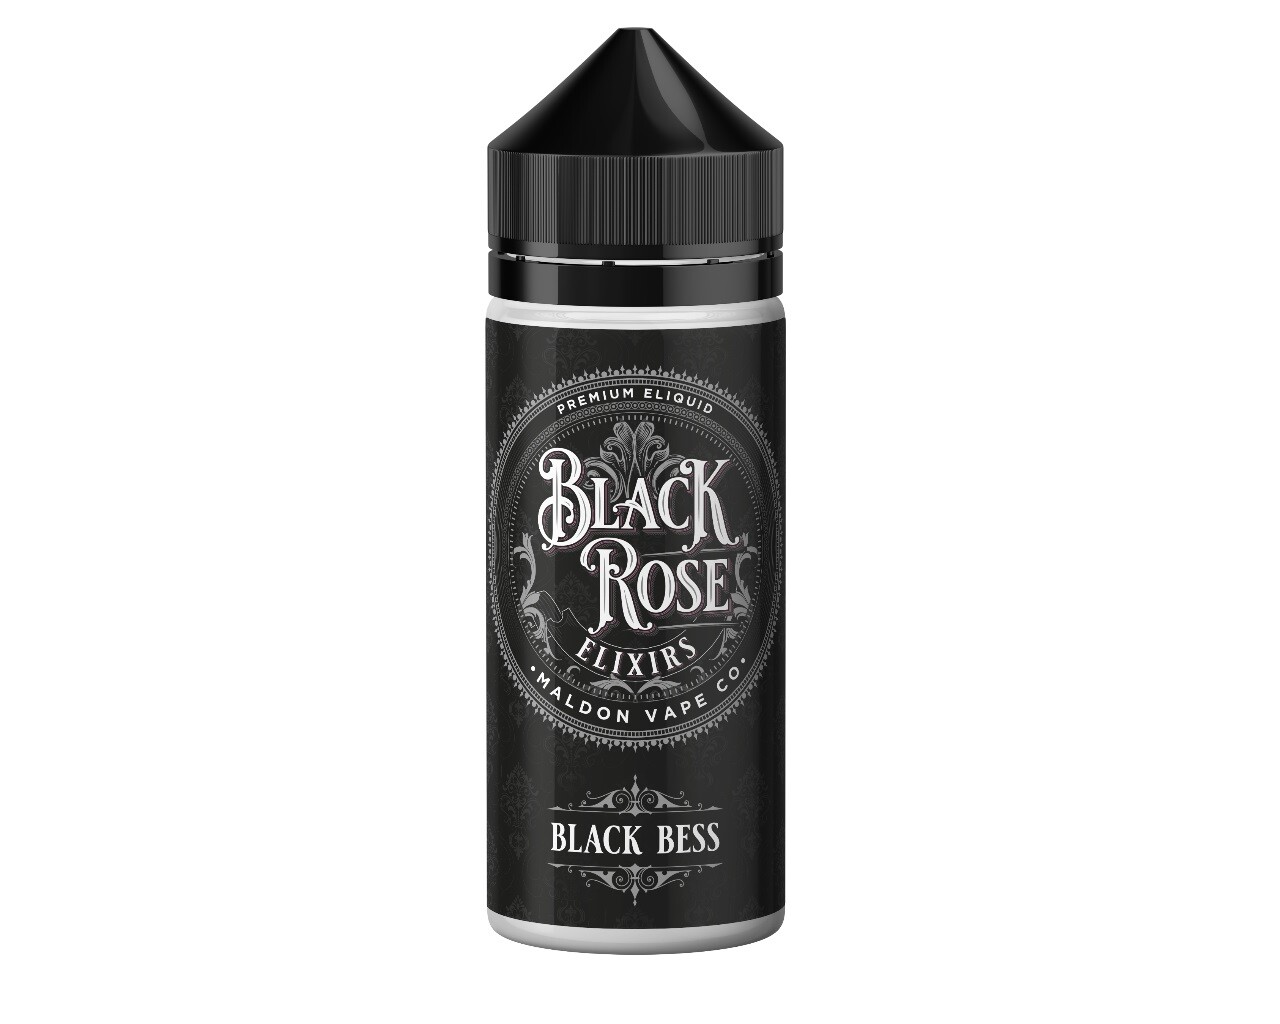 black bess flavoured e-liquid 100ml shortfill by black rose elixir